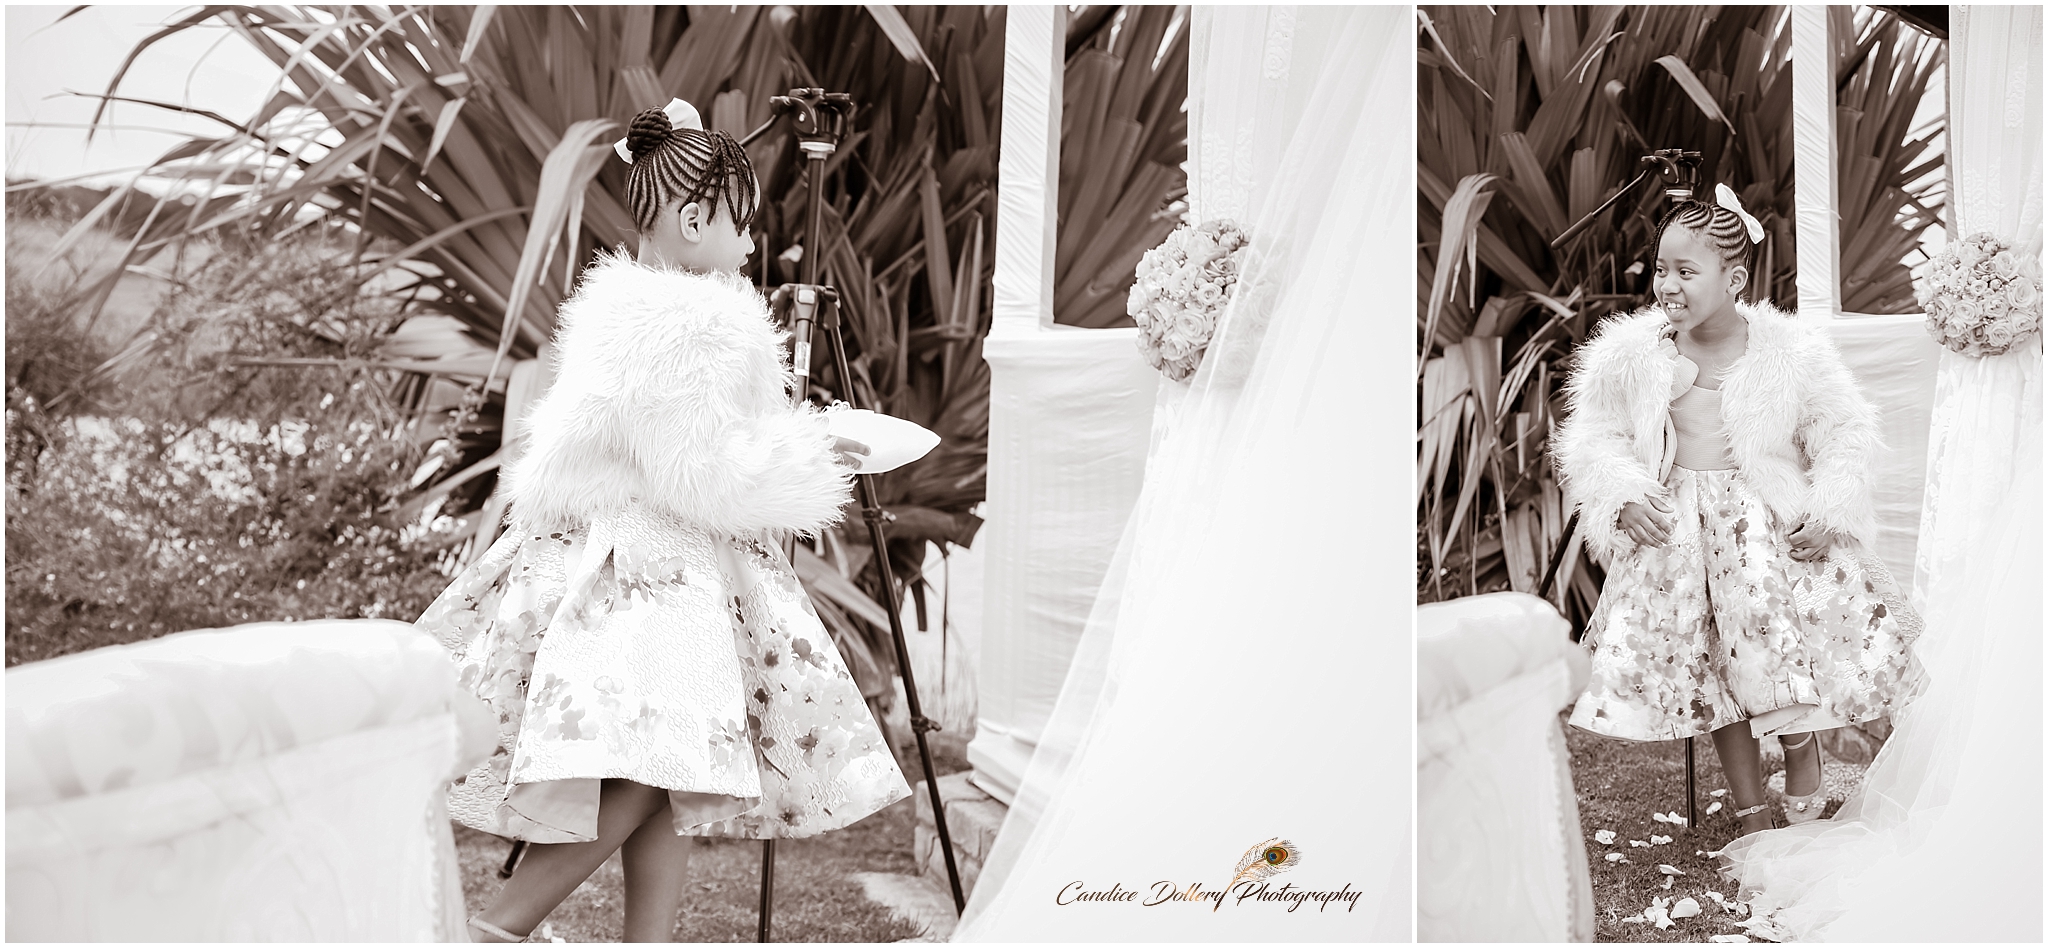 wedding - Candice Dollery Photography_3639